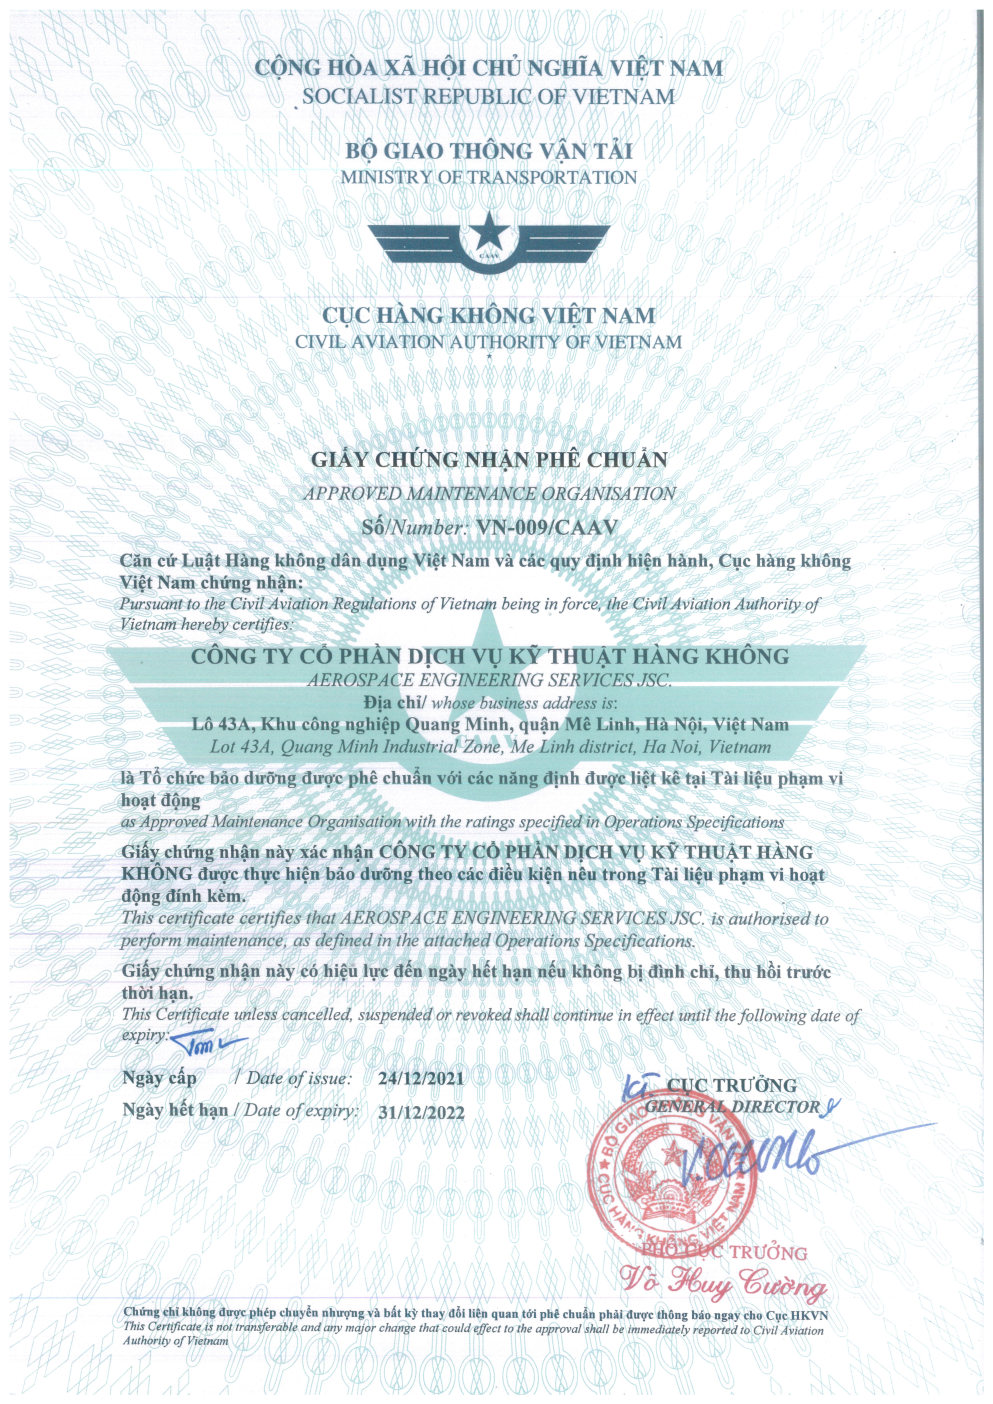 EASA Maintenance Organization Approval Certificate